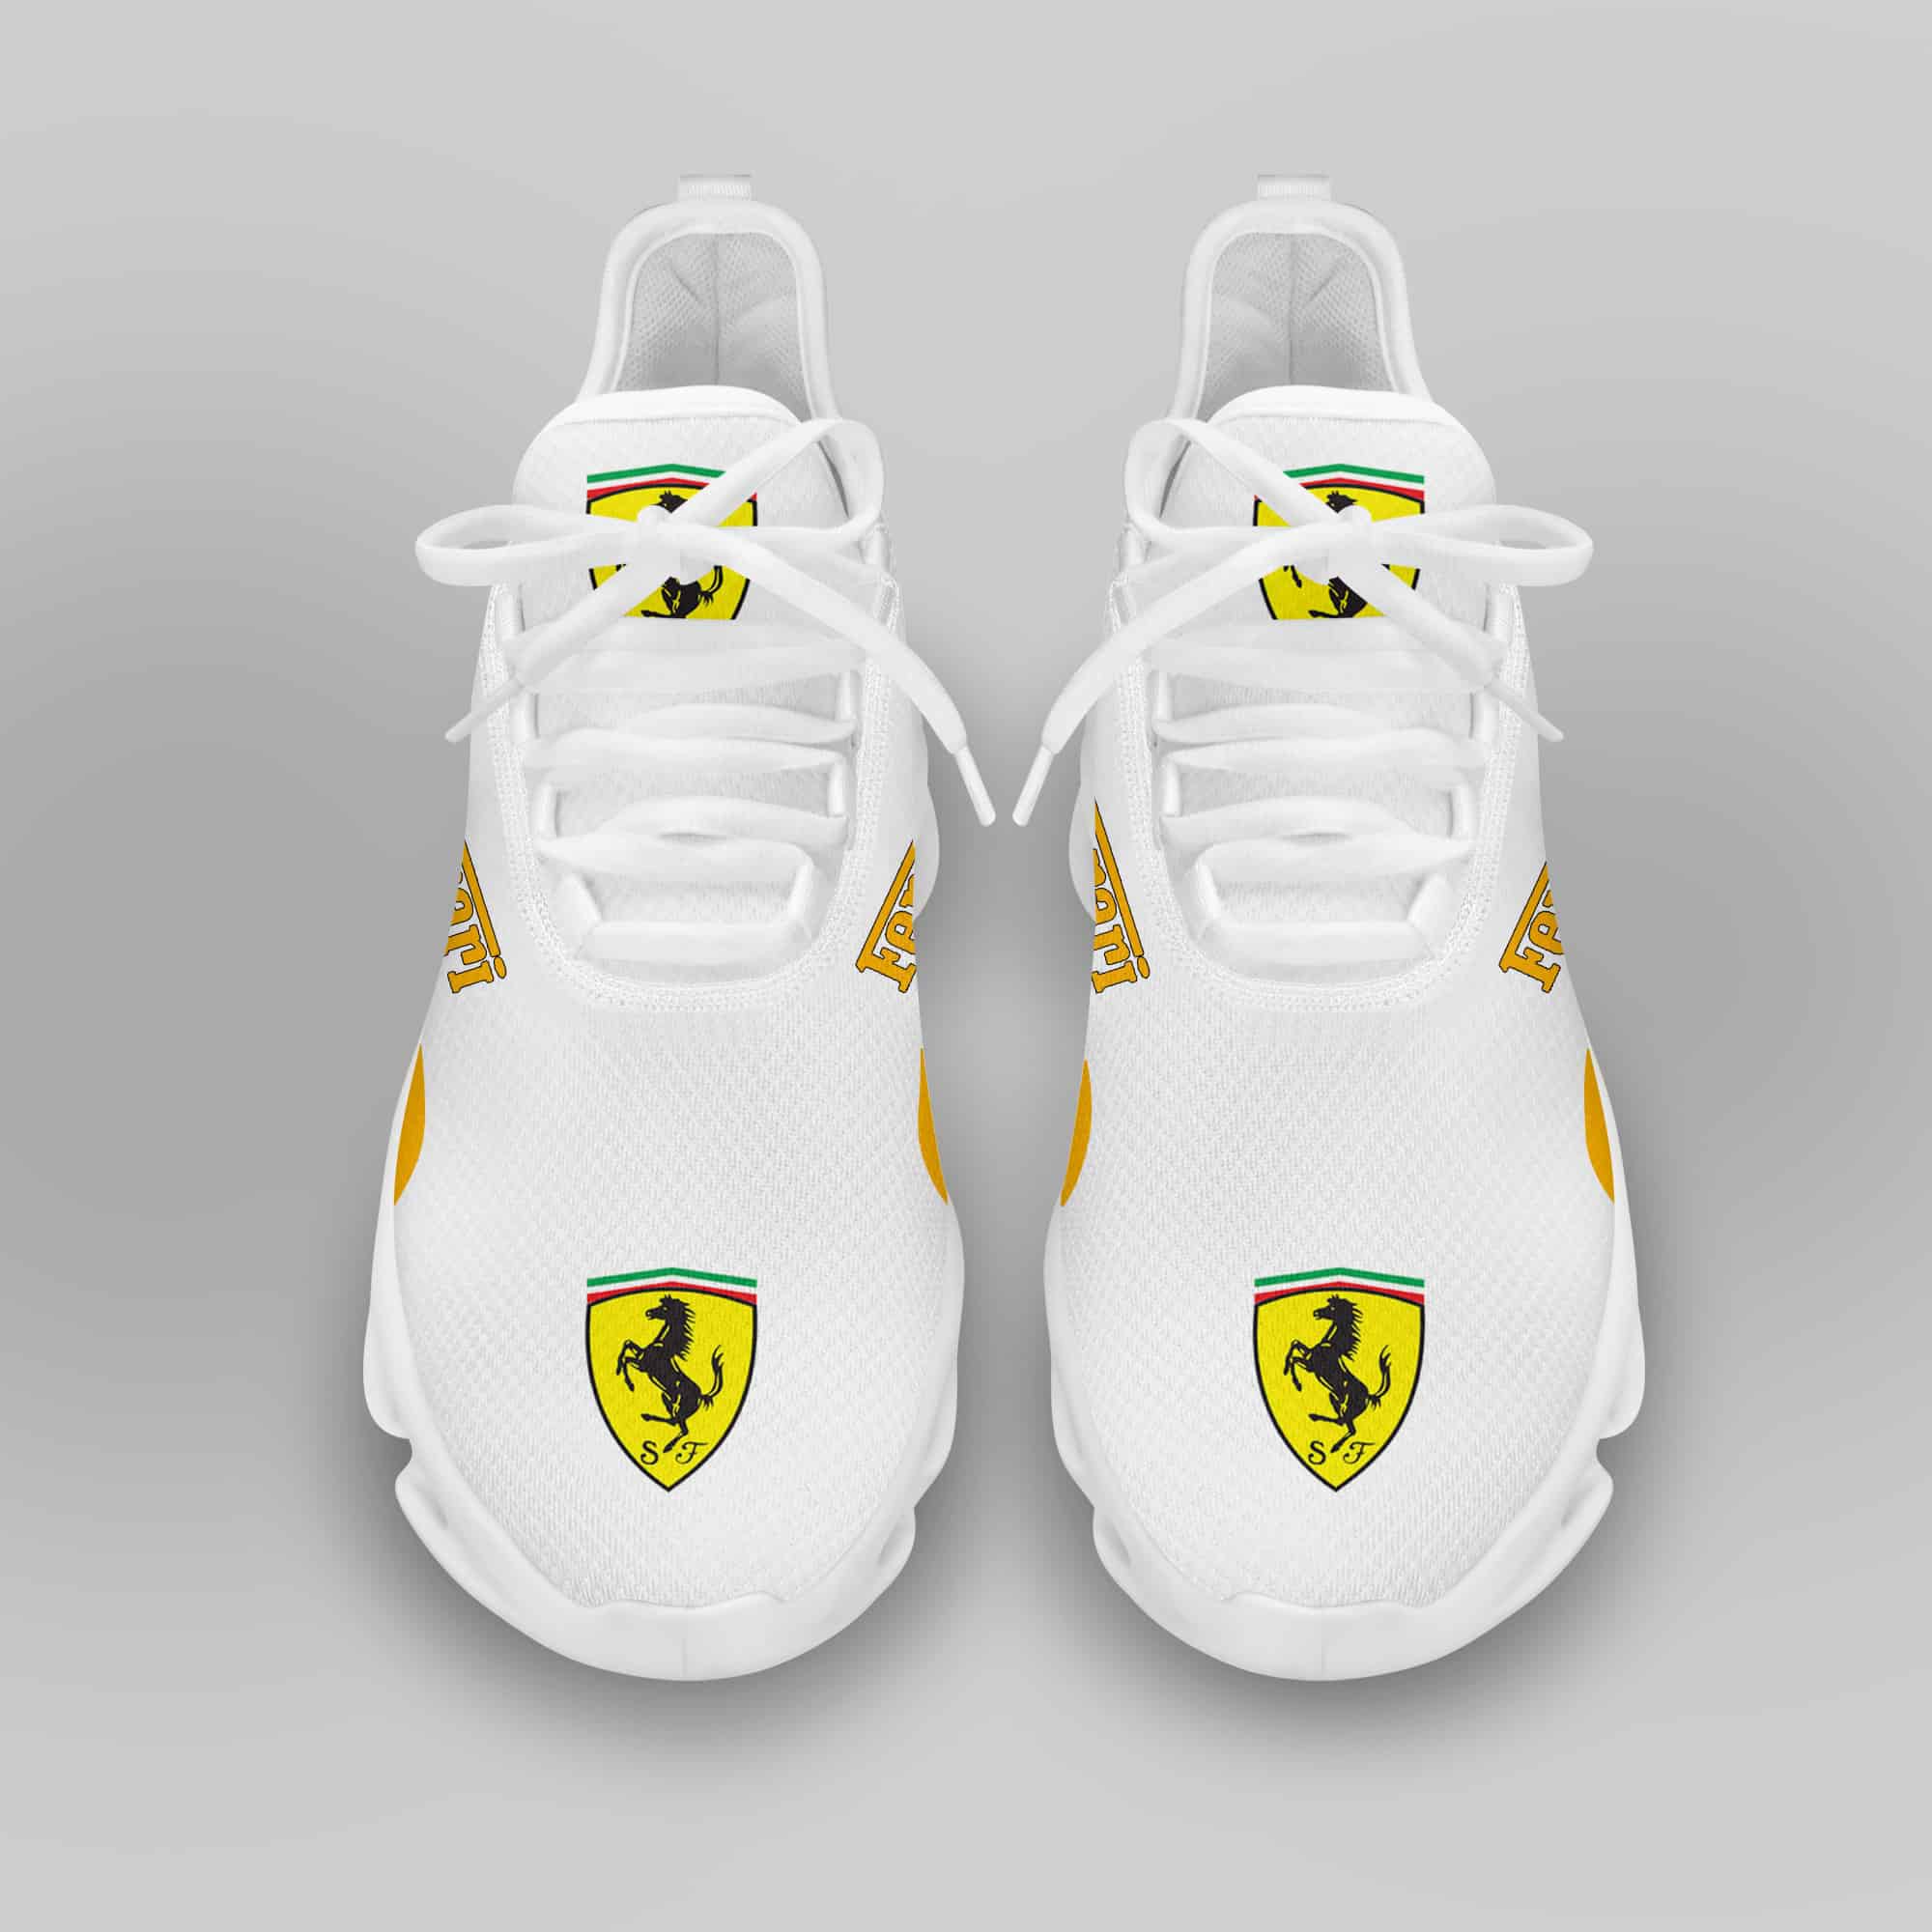 Ferrari Sneaker Running Shoes Max Soul Shoes Sneakers Ver 21 3